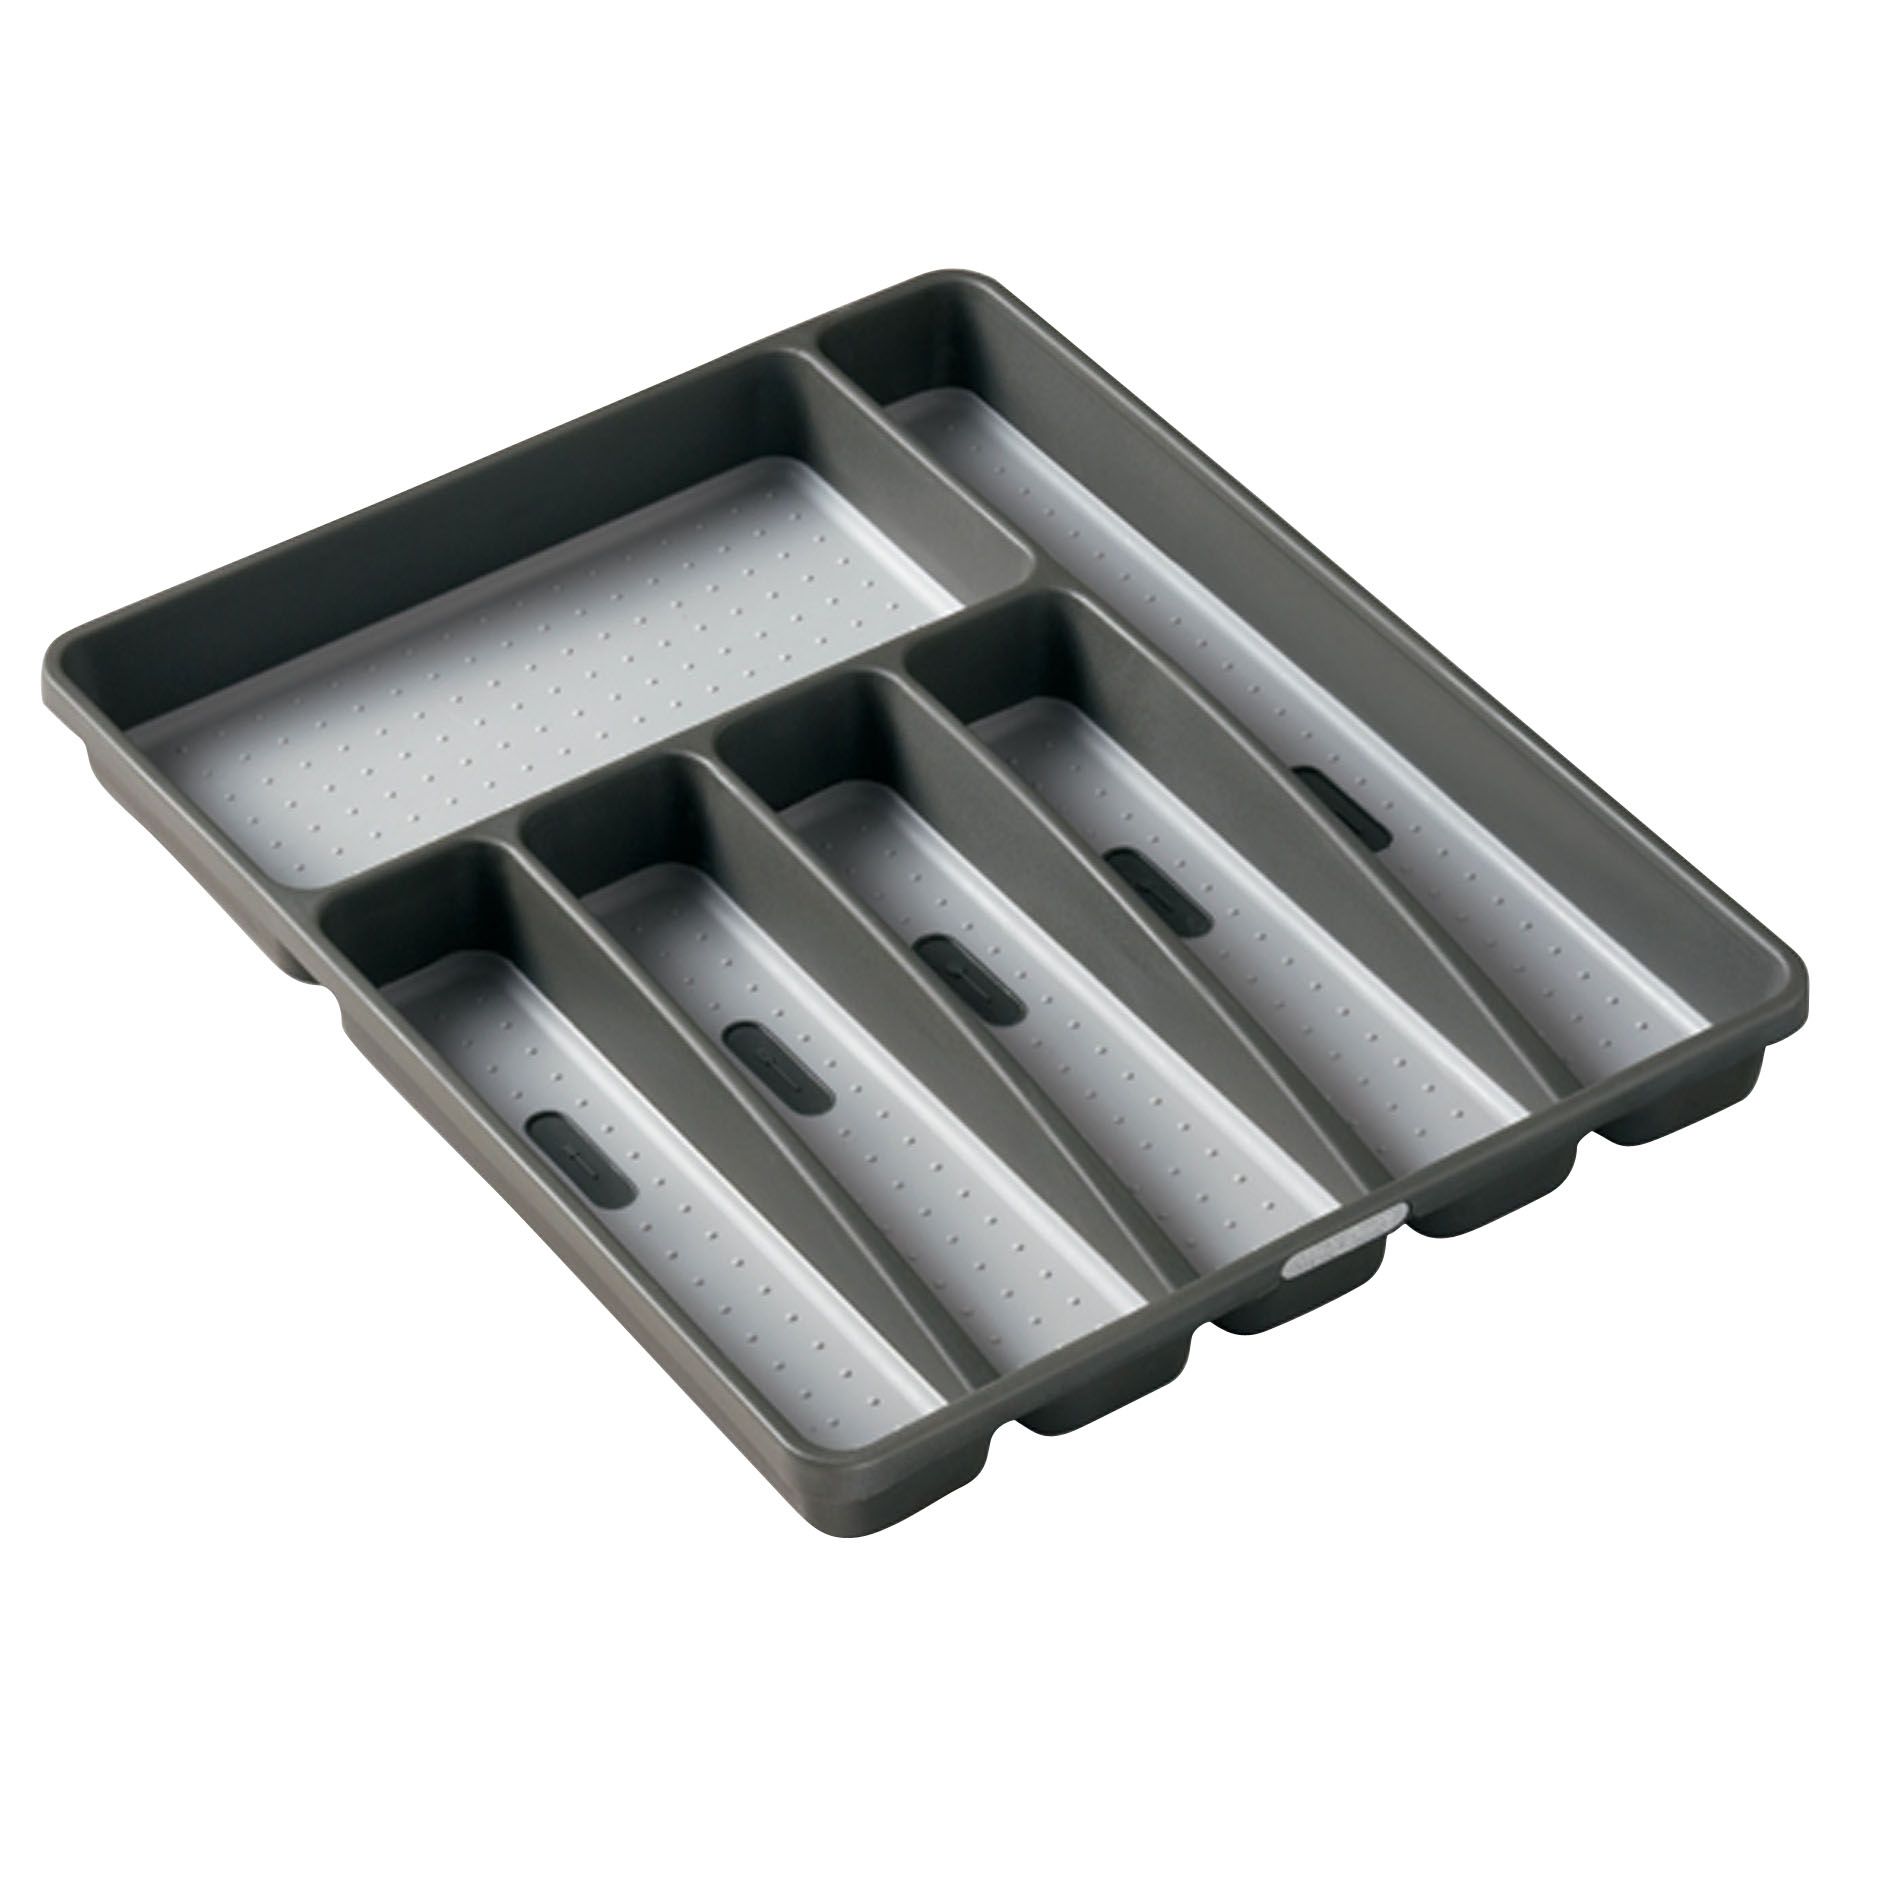  MadeSmart Housewares Six Compartment Large Silverware Tray Granite - DV INTERNATIONAL 